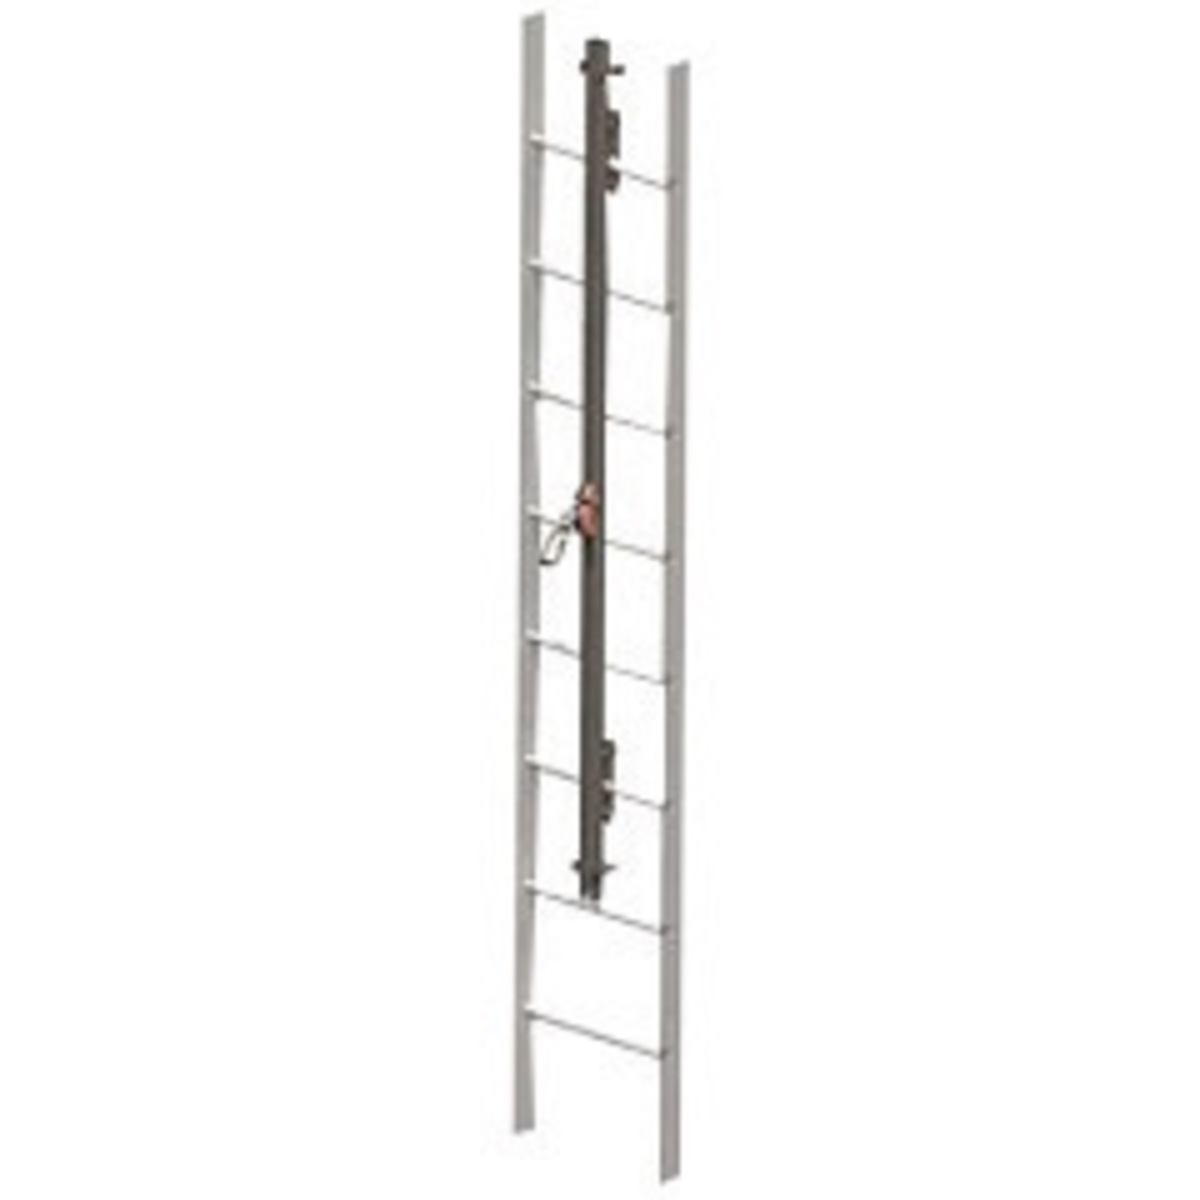 Honeywell Miller® GlideLoc® Fixed 30' Vertical Height Access Ladder System Kit